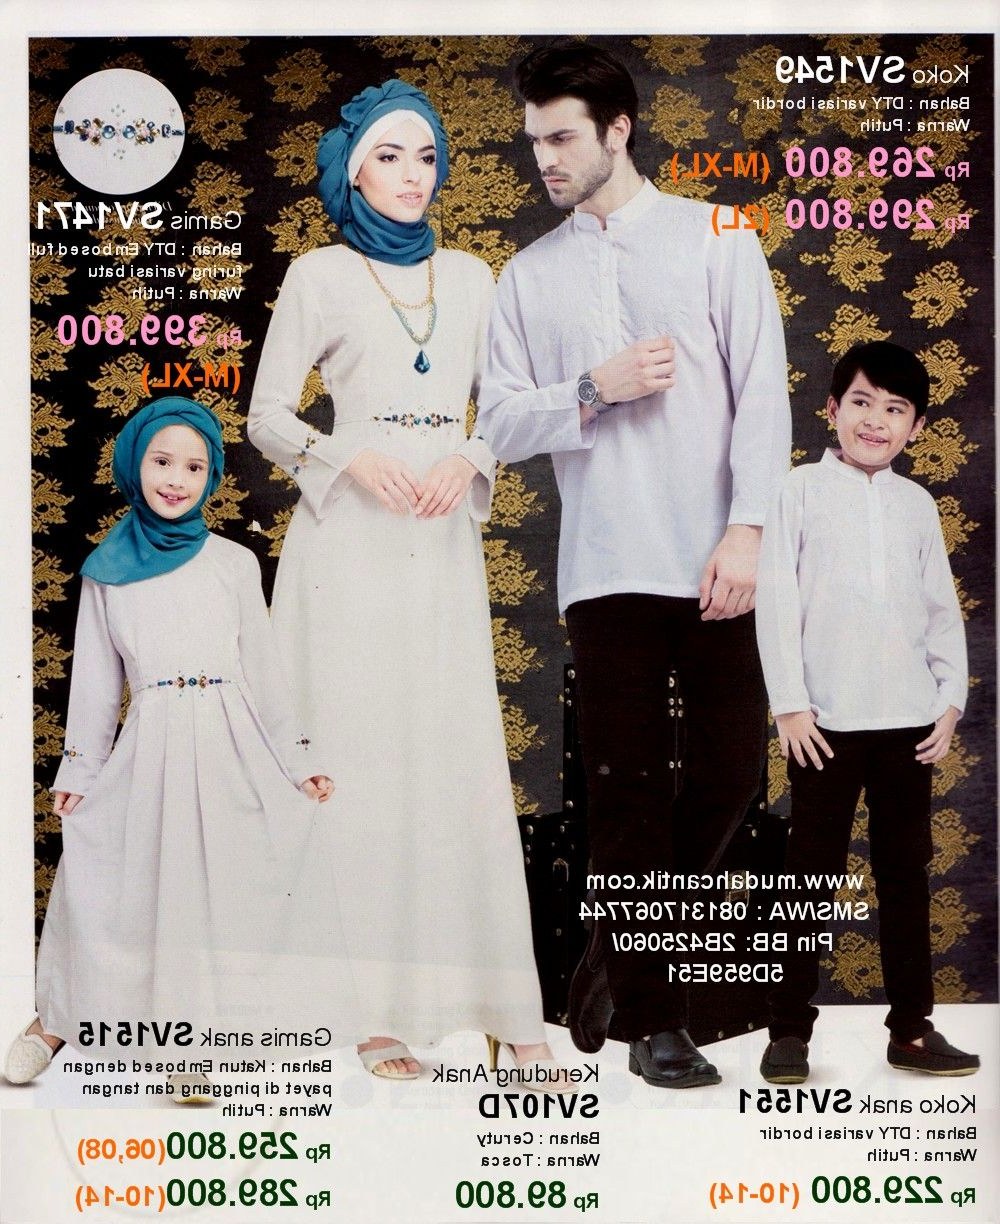 Design Harga Baju Lebaran Keluarga Tanah Abang Fmdf Baju Muslim Couple Keluarga Tanah Abang Di 2020